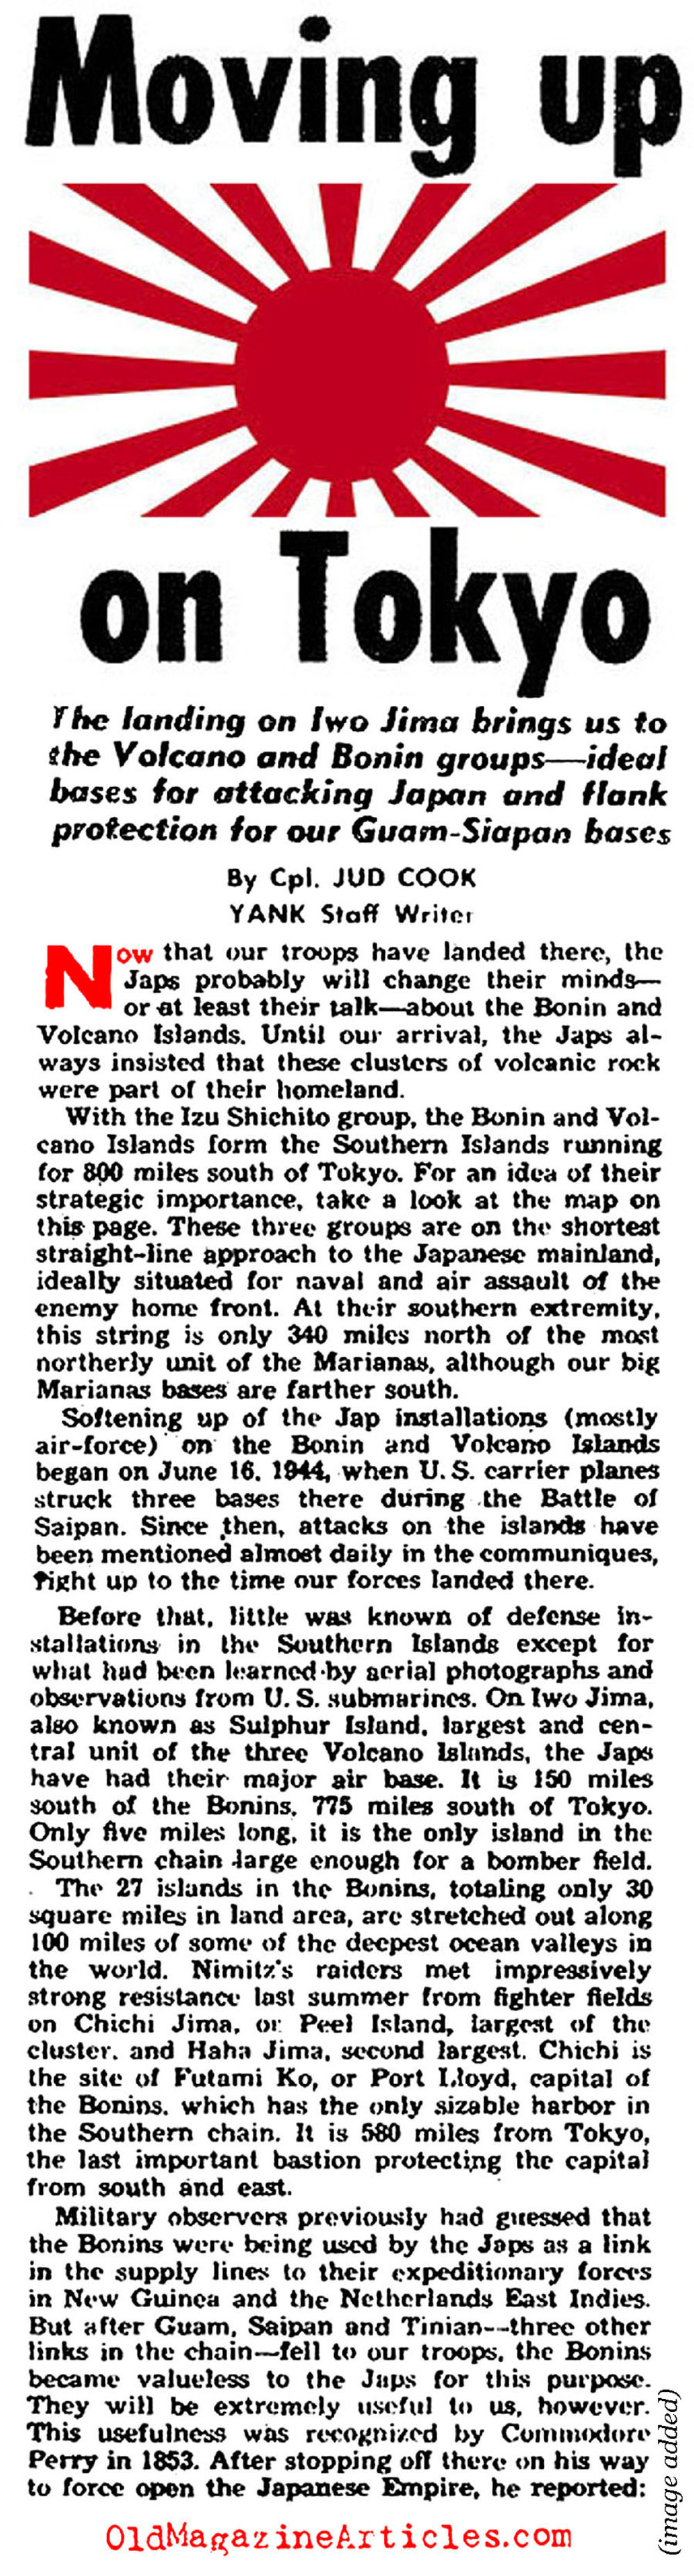 The Invasion of Japan and the Importance of Iwo Jima (Yank Magazine, 1945)